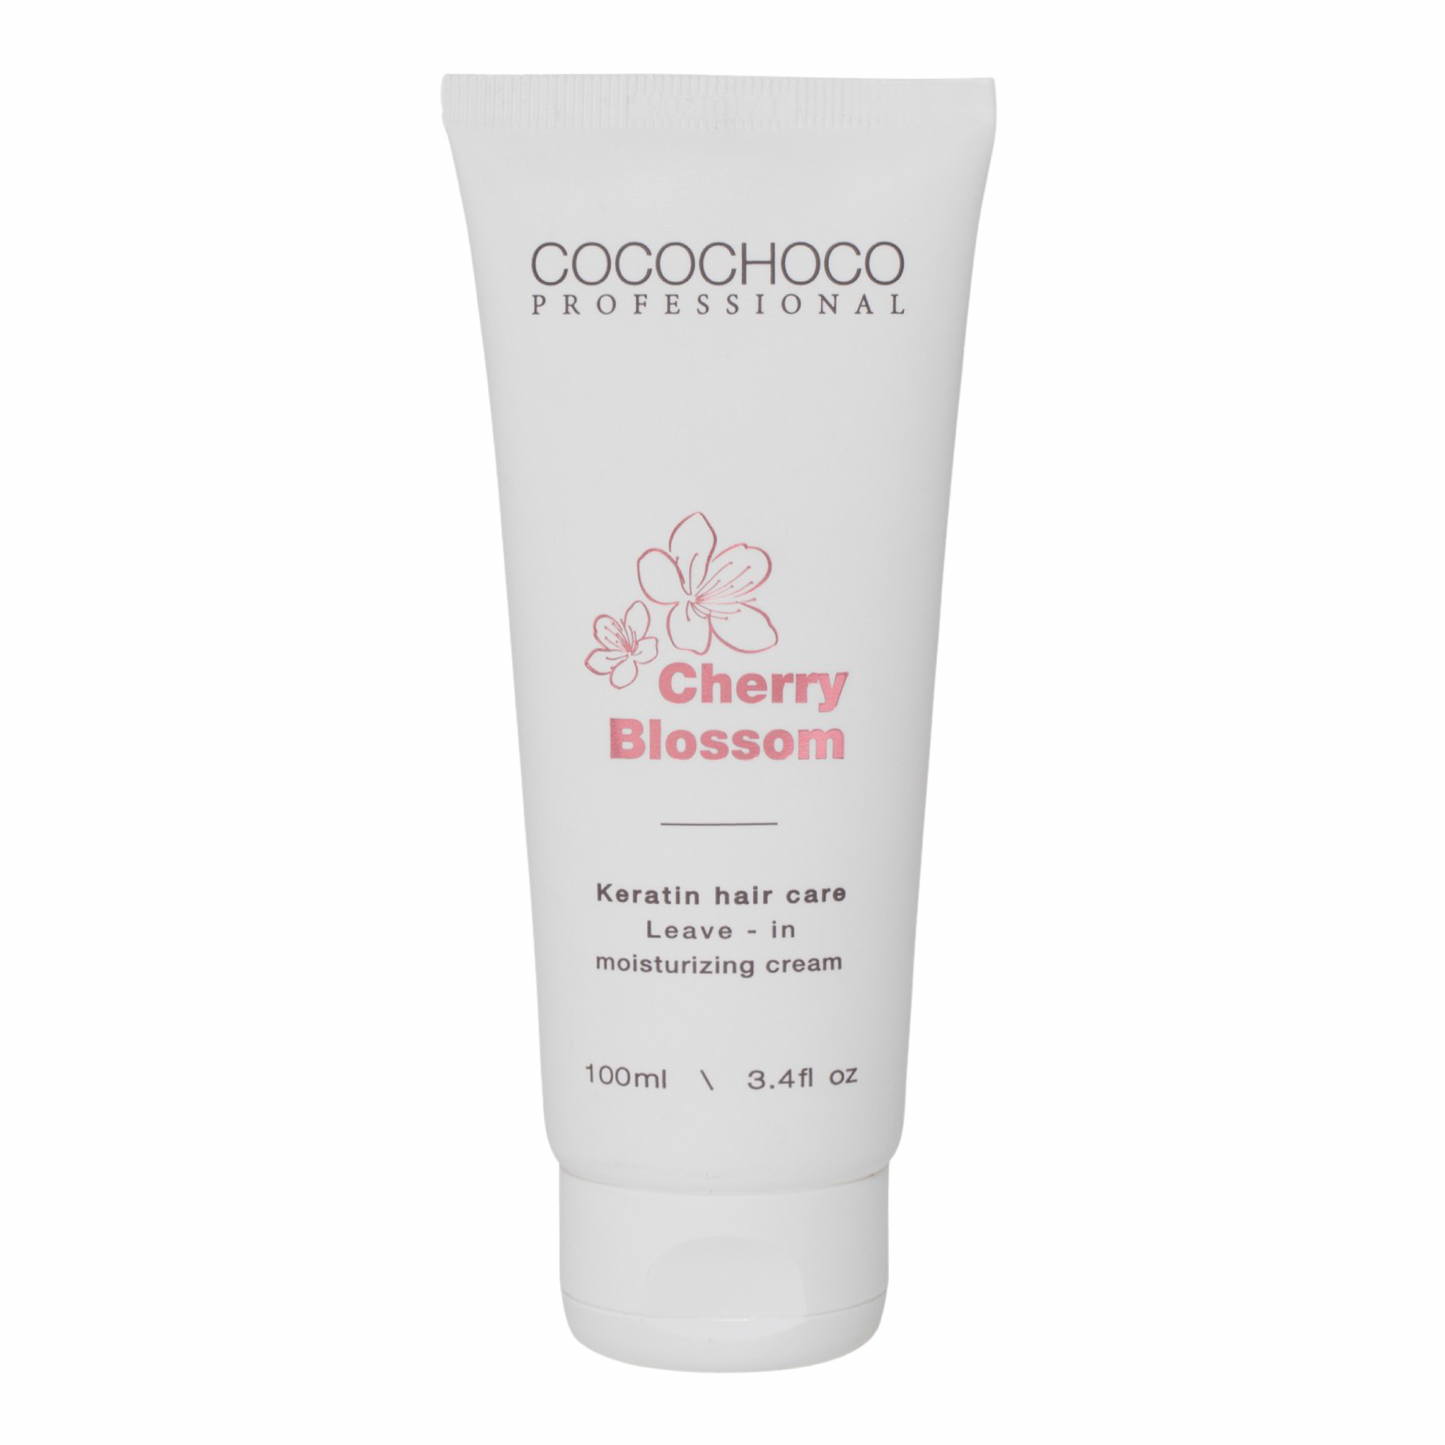 Cocochoco Cherry Blossom Leave-in Keratin Hair Care 100 ml - Anti Frizz